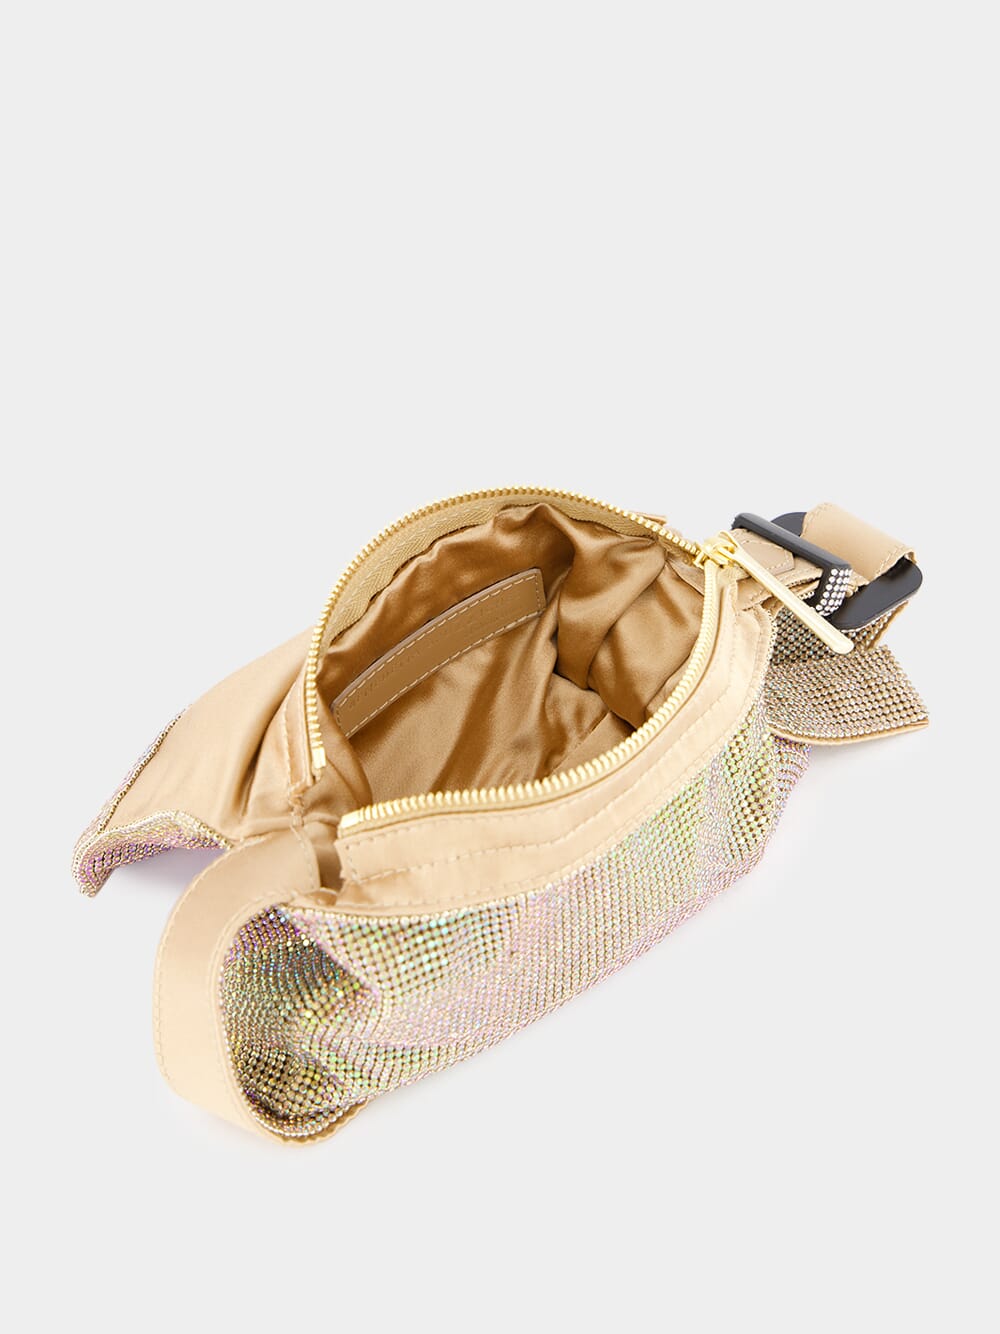 Vitty La Mignon Gold Shoulder Bag